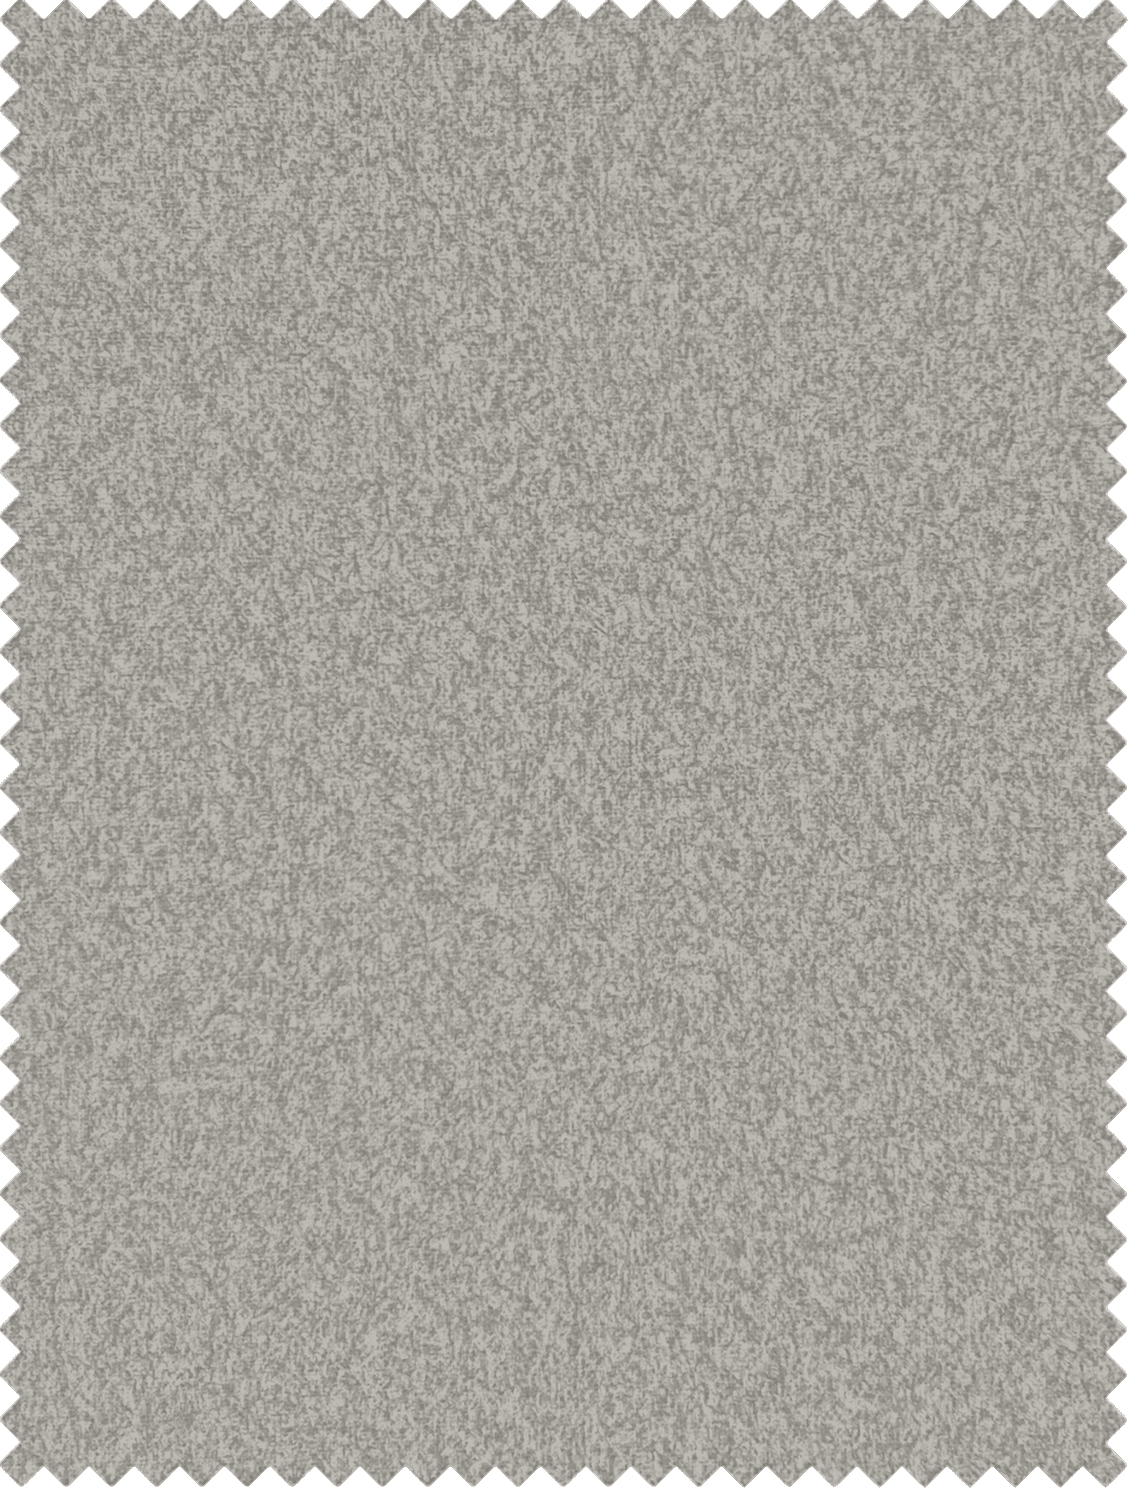 Vant Panels Faux Merino Wool Gray Swatch